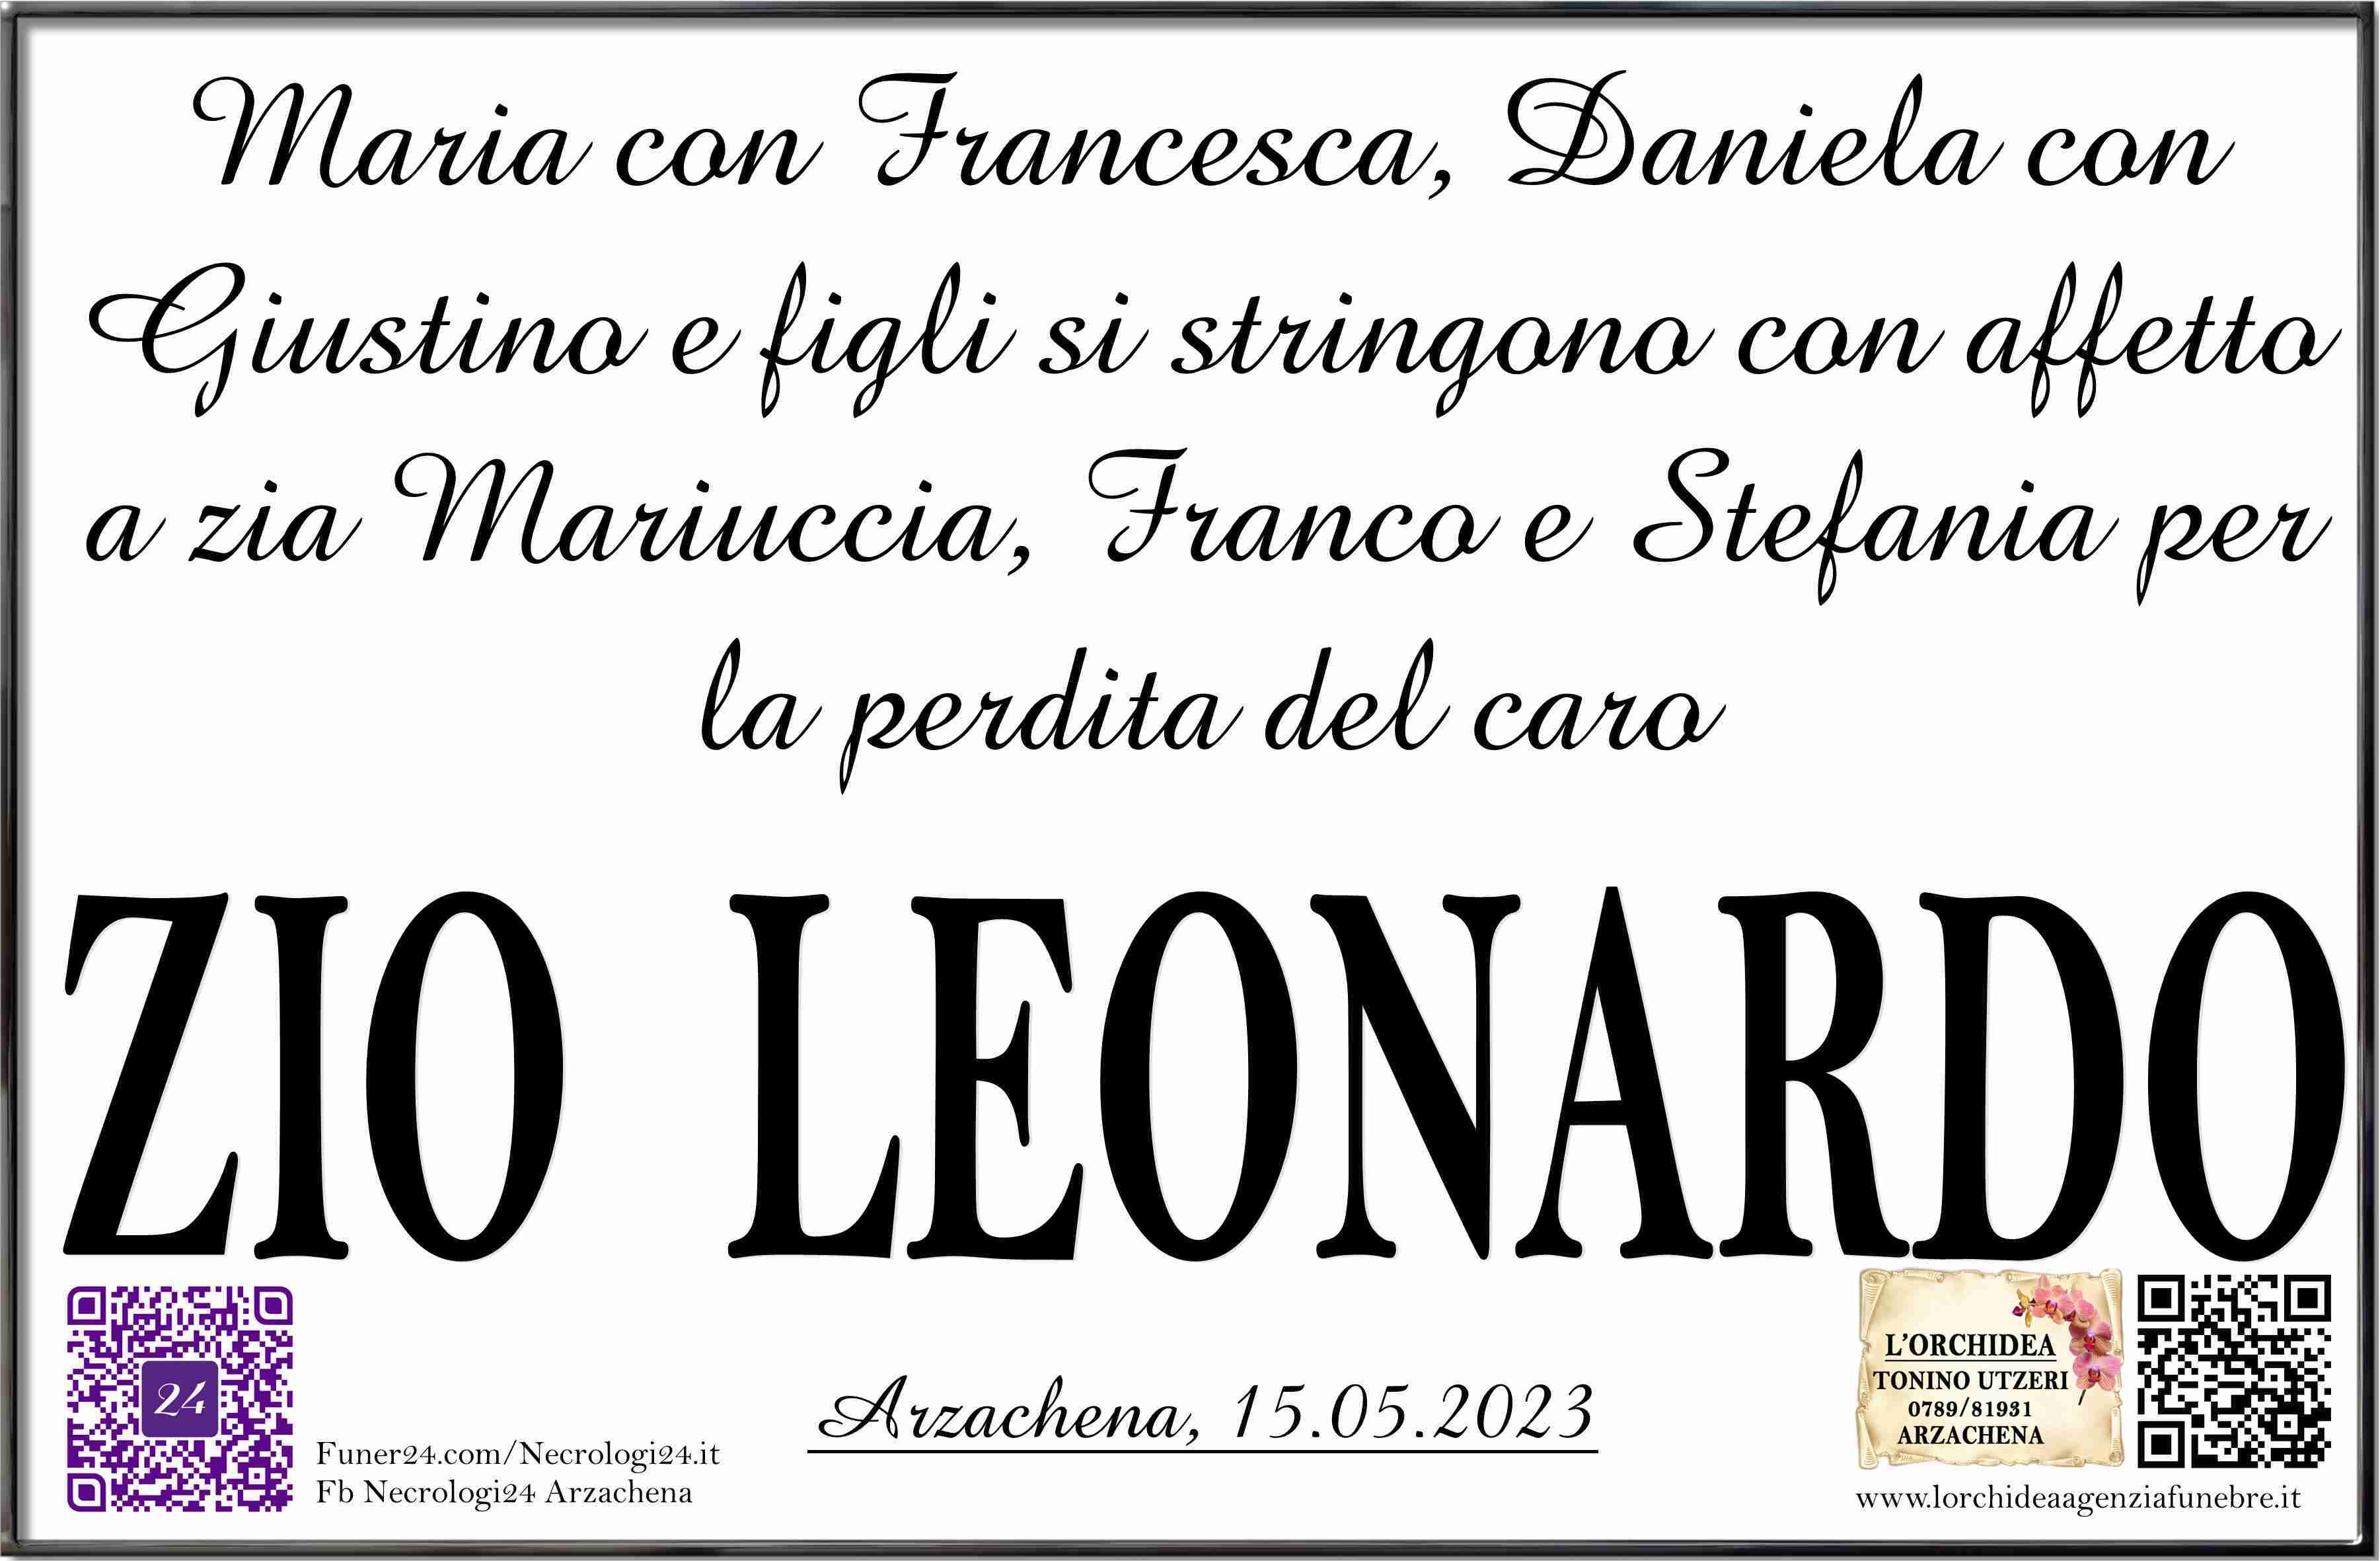 Leonardo Spano